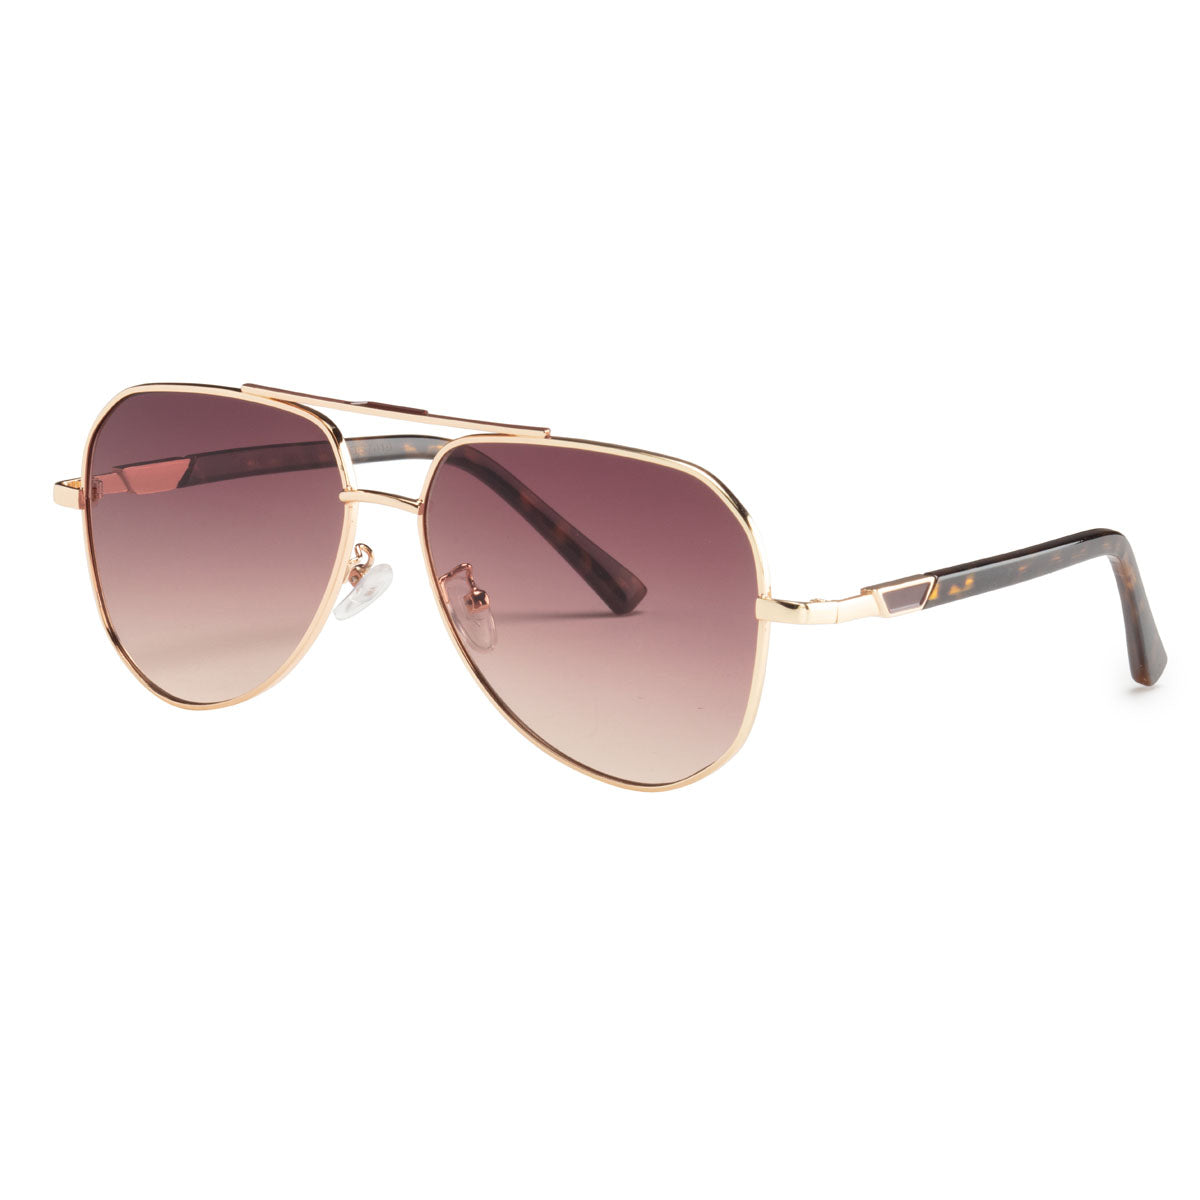 Sunglasses - EBS7019 Monterey